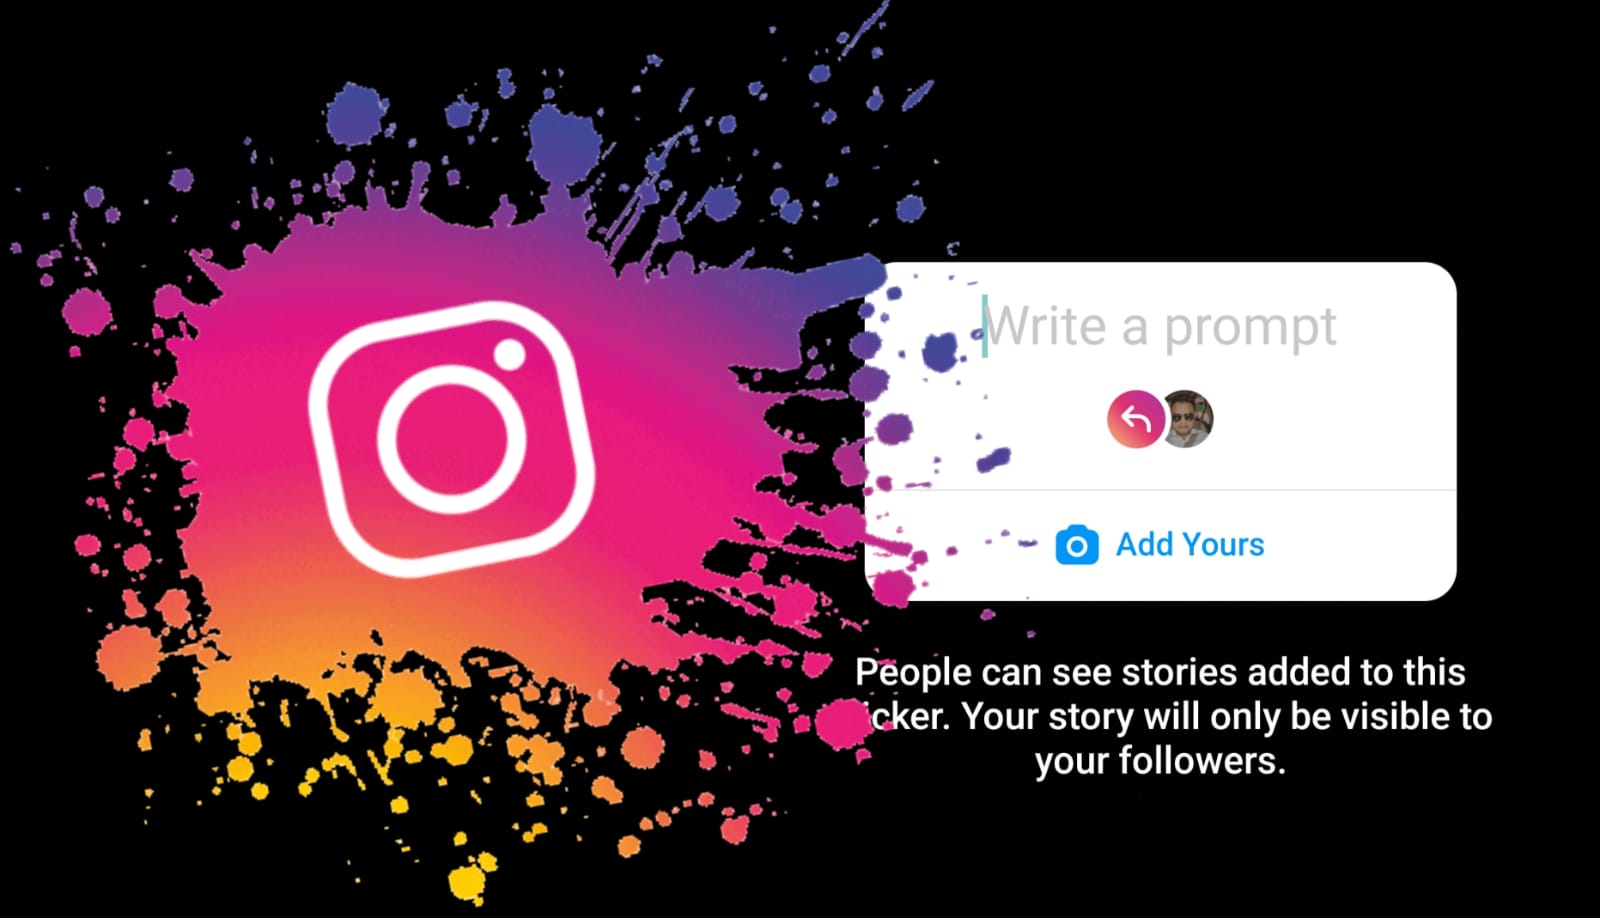 Fitur baru Add Yours dari Instagram, bisa bikin Story Threads